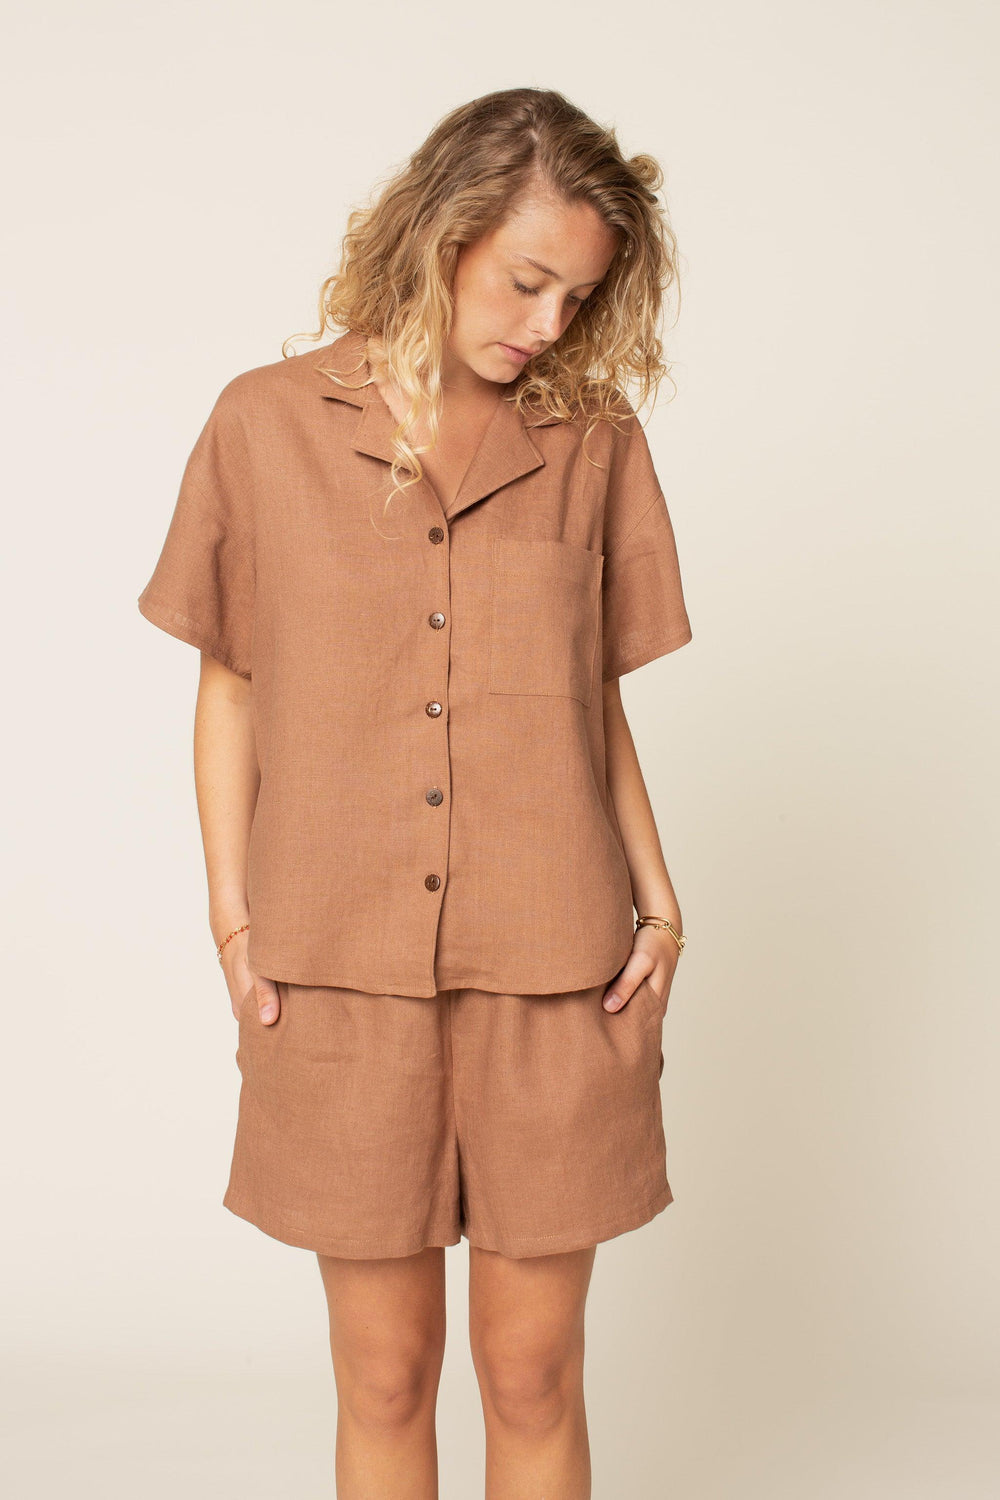 Camp Shirt and shorts sewing pattern - Wardrobe By Me